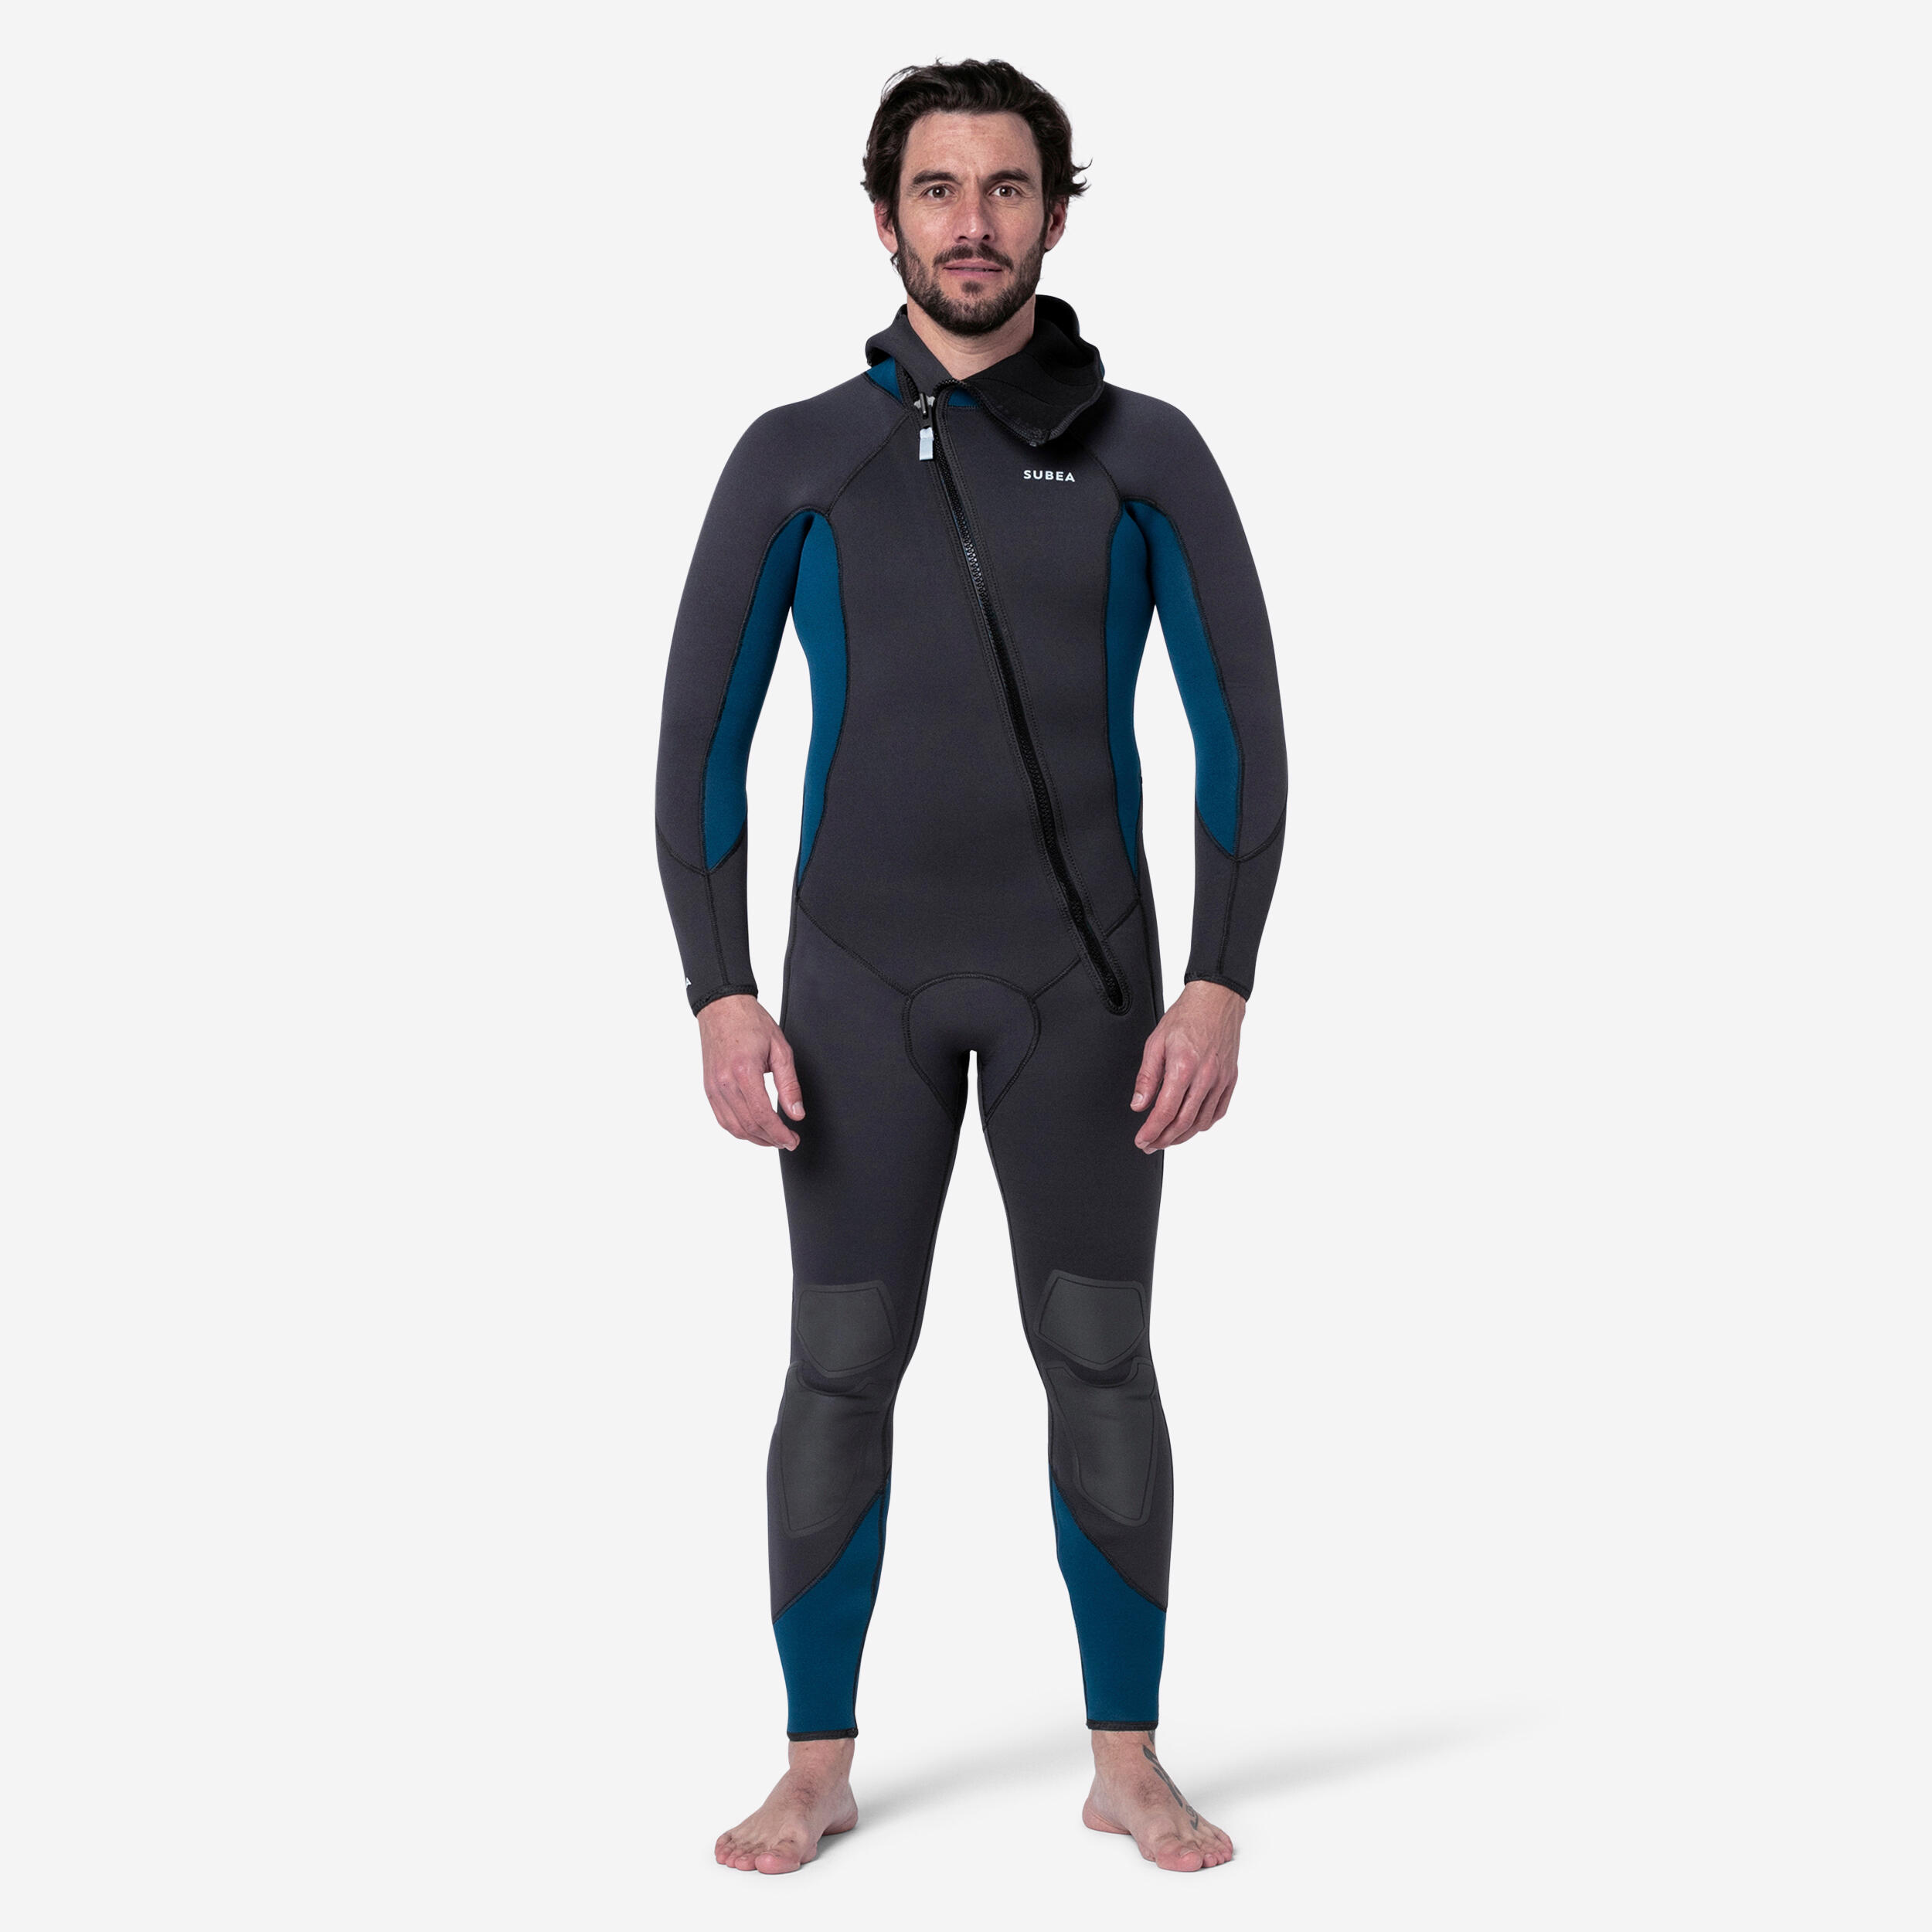 Men's diving wetsuit 5 mm neoprene SCD 500 black and blue 1/9